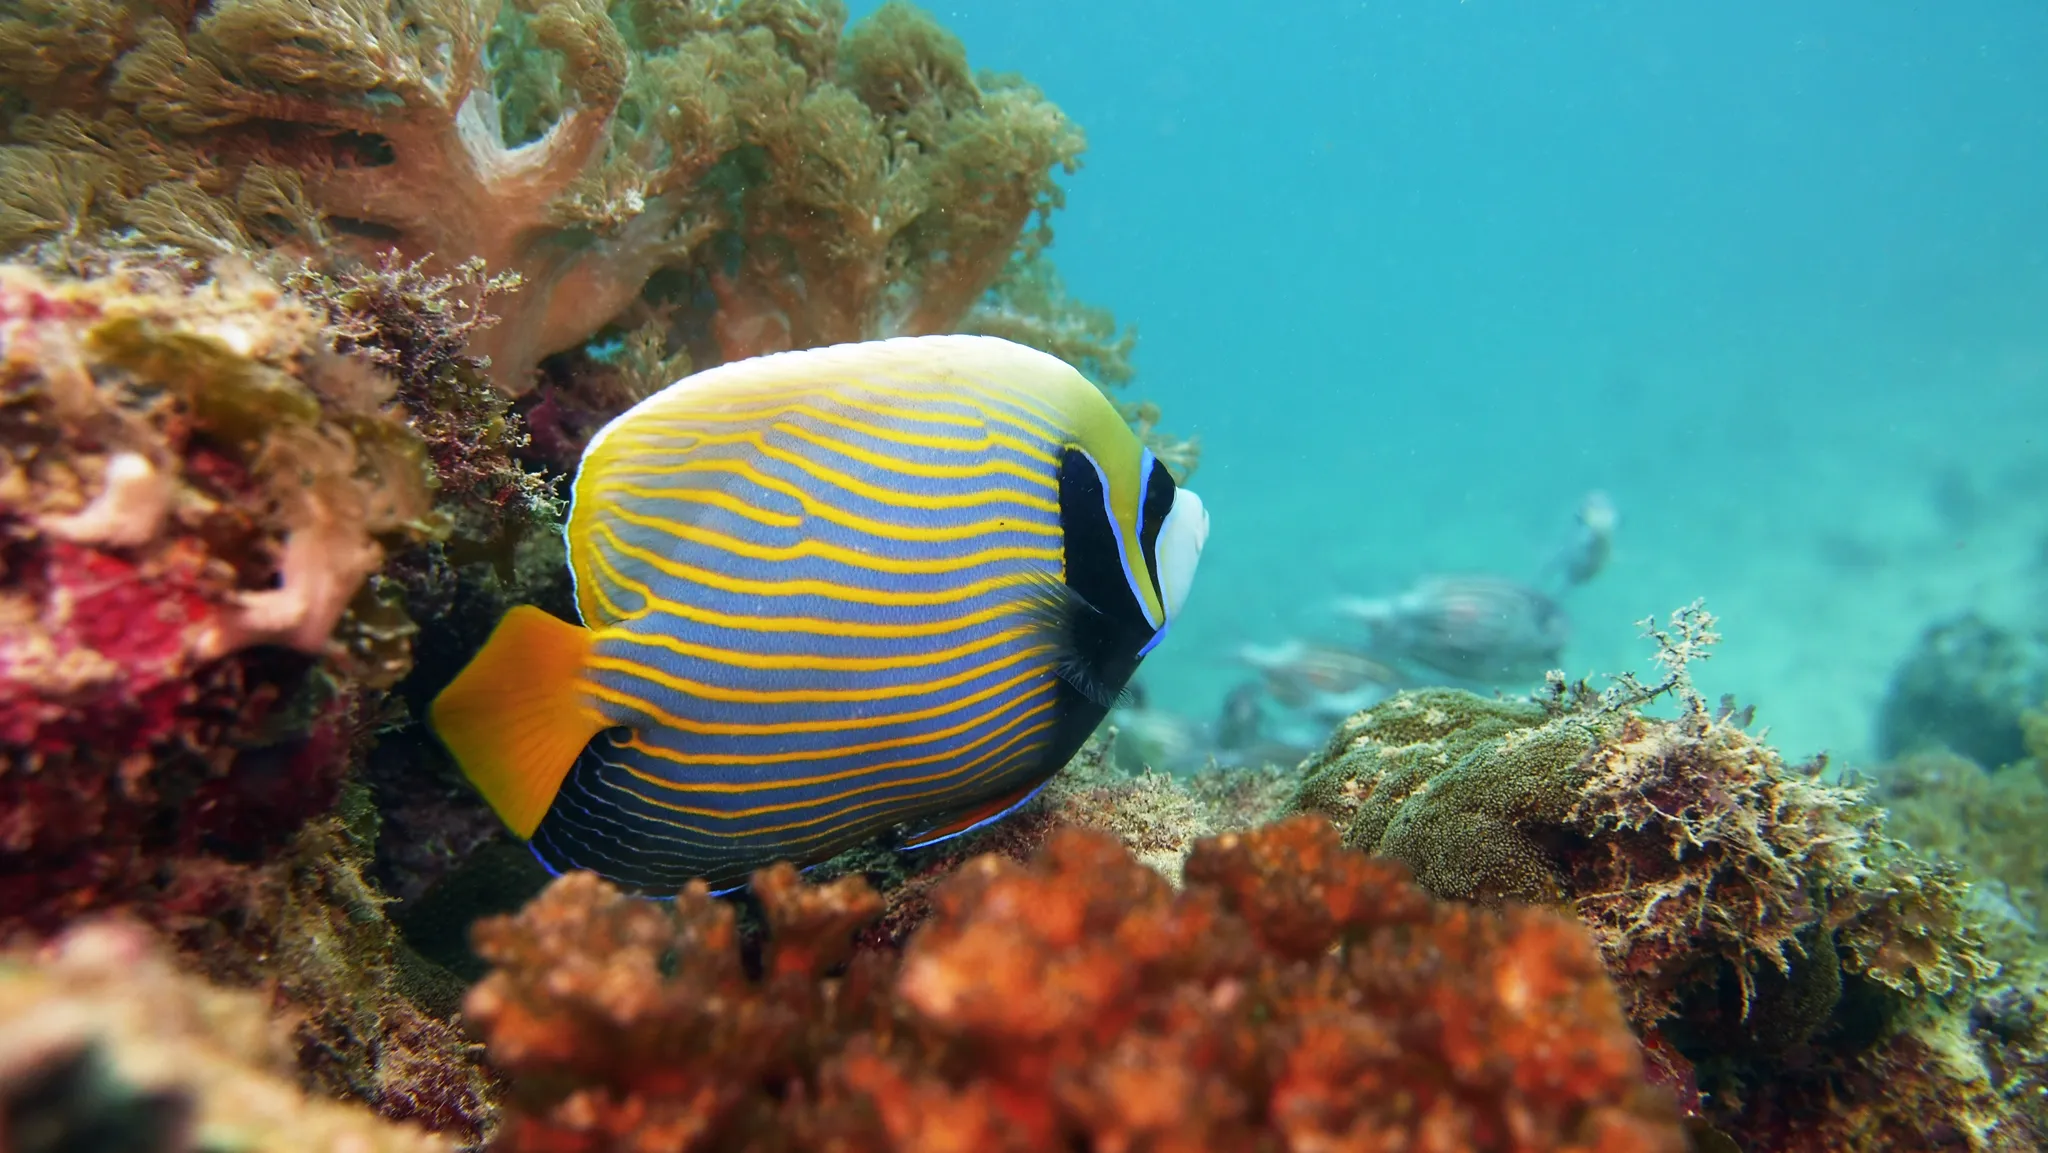 Fun Divers Zanzibar in Tanzania, Africa | Diving,Scuba Diving - Rated 0.9